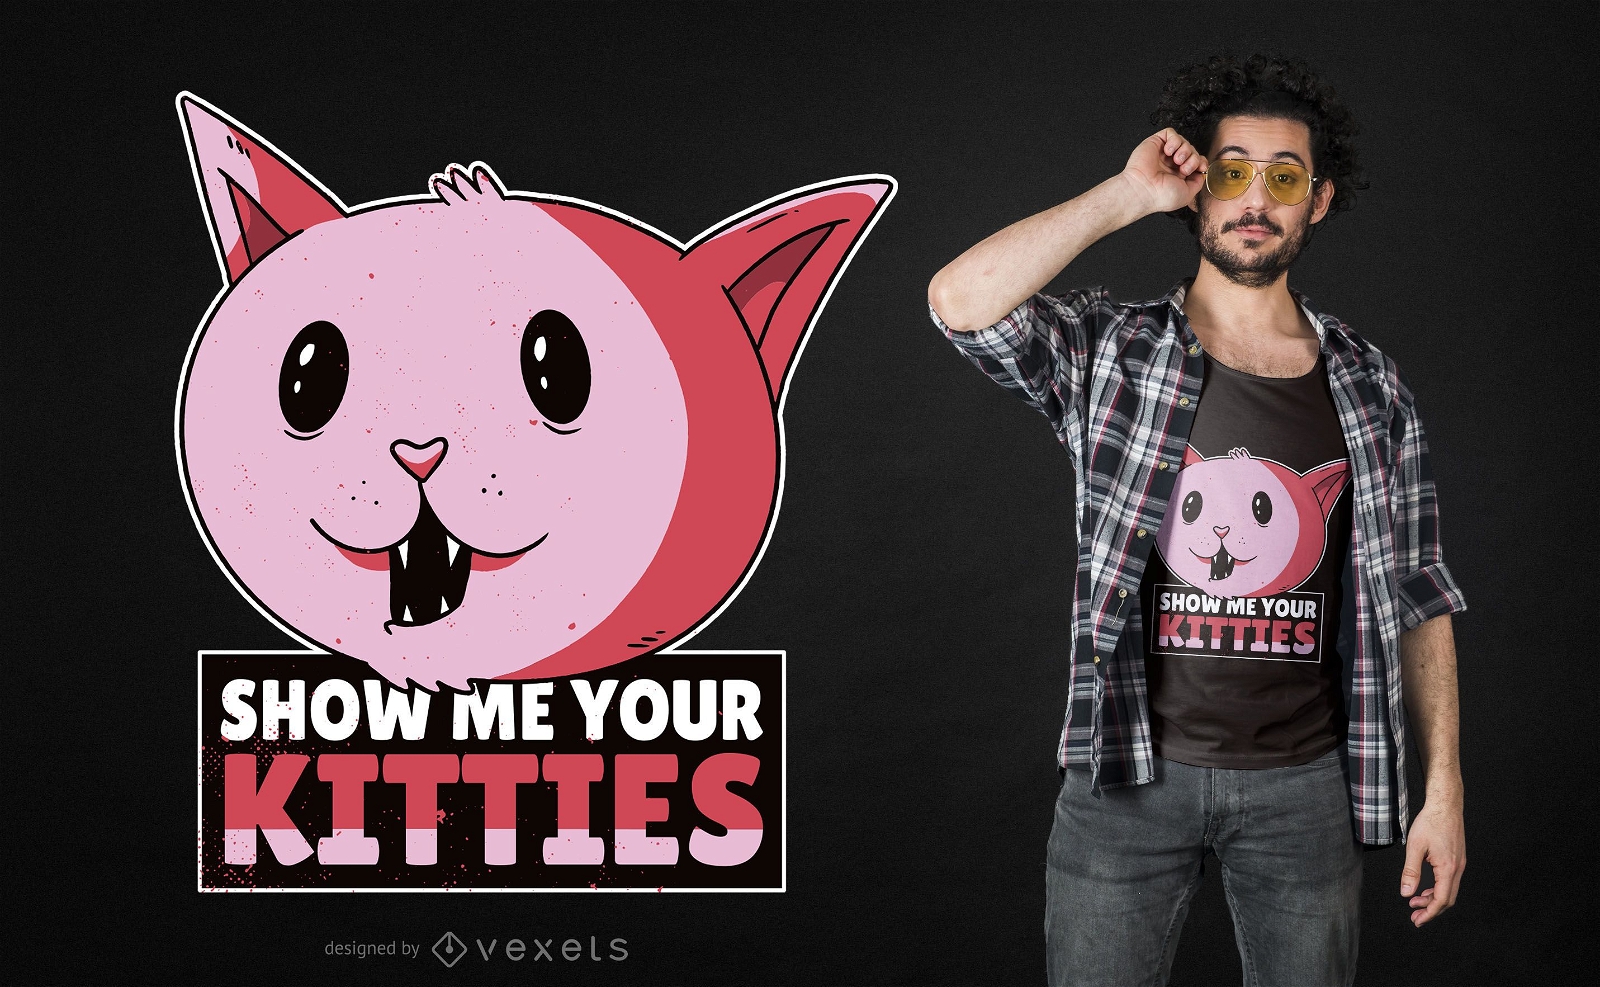 Show me your kitties t-shirt design